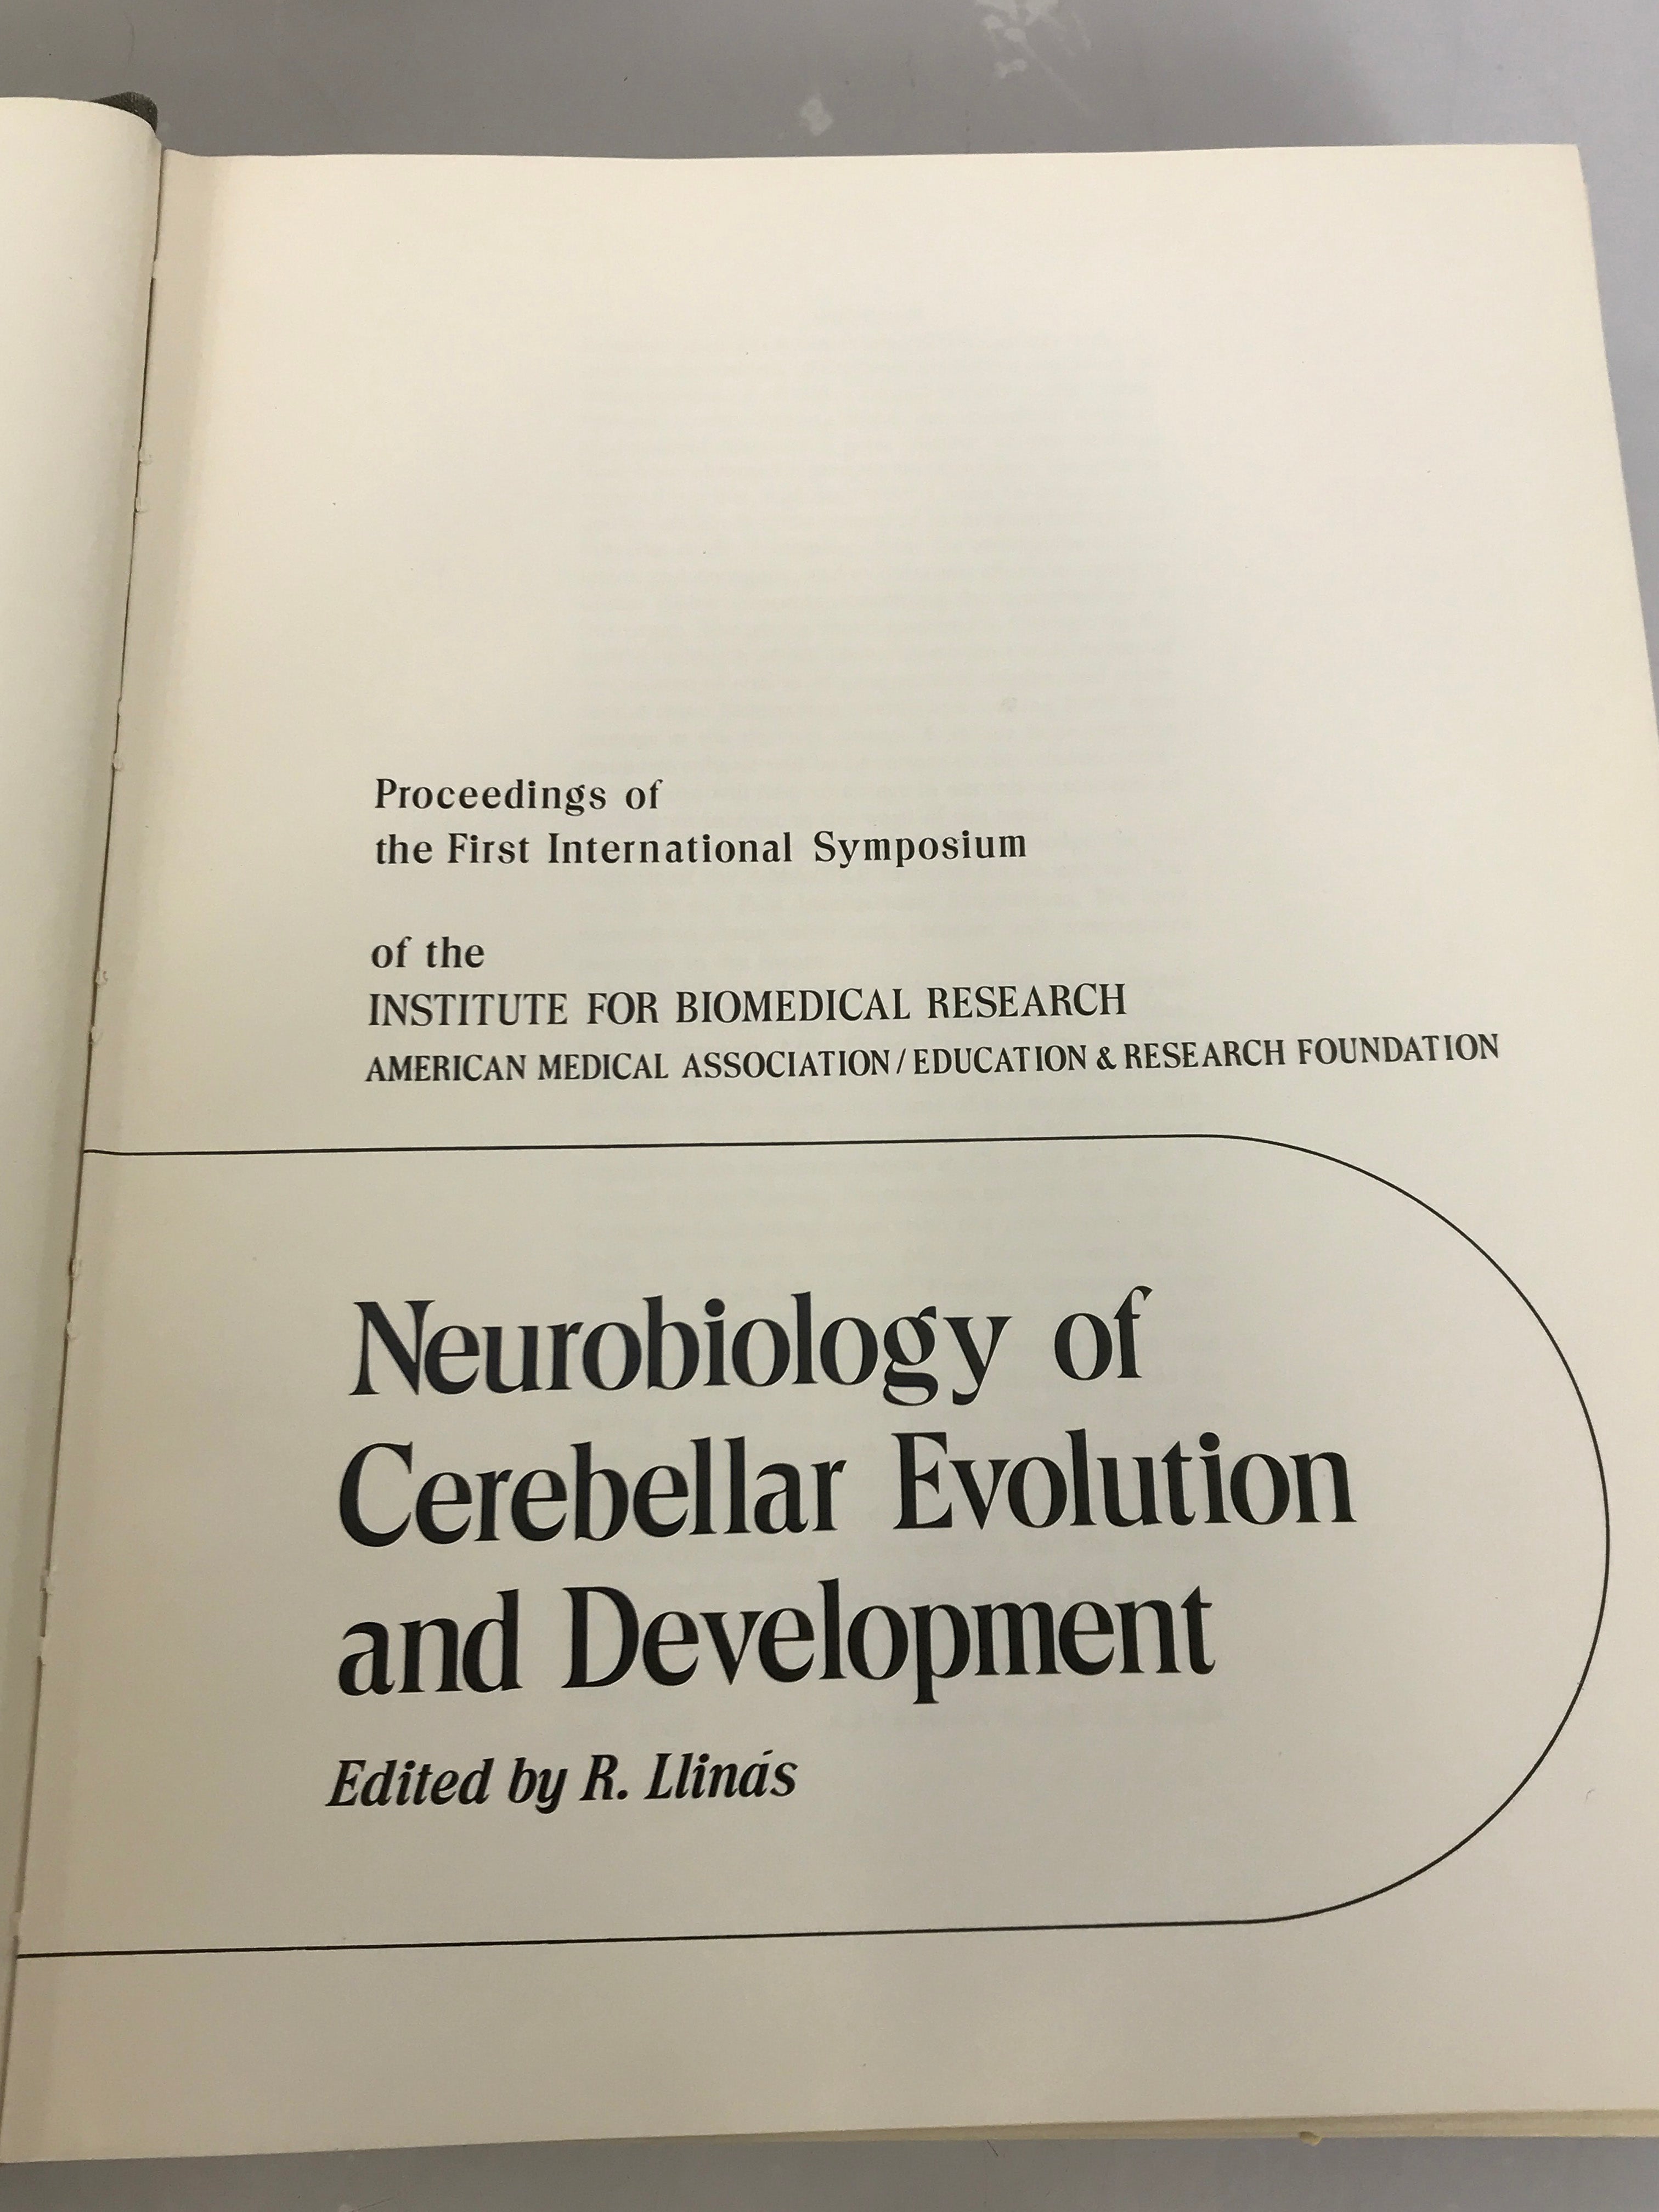 Neurobiology of Cerebellar Evolution and Development First International Symposium by R. Llinas HC in Slipcase 1969